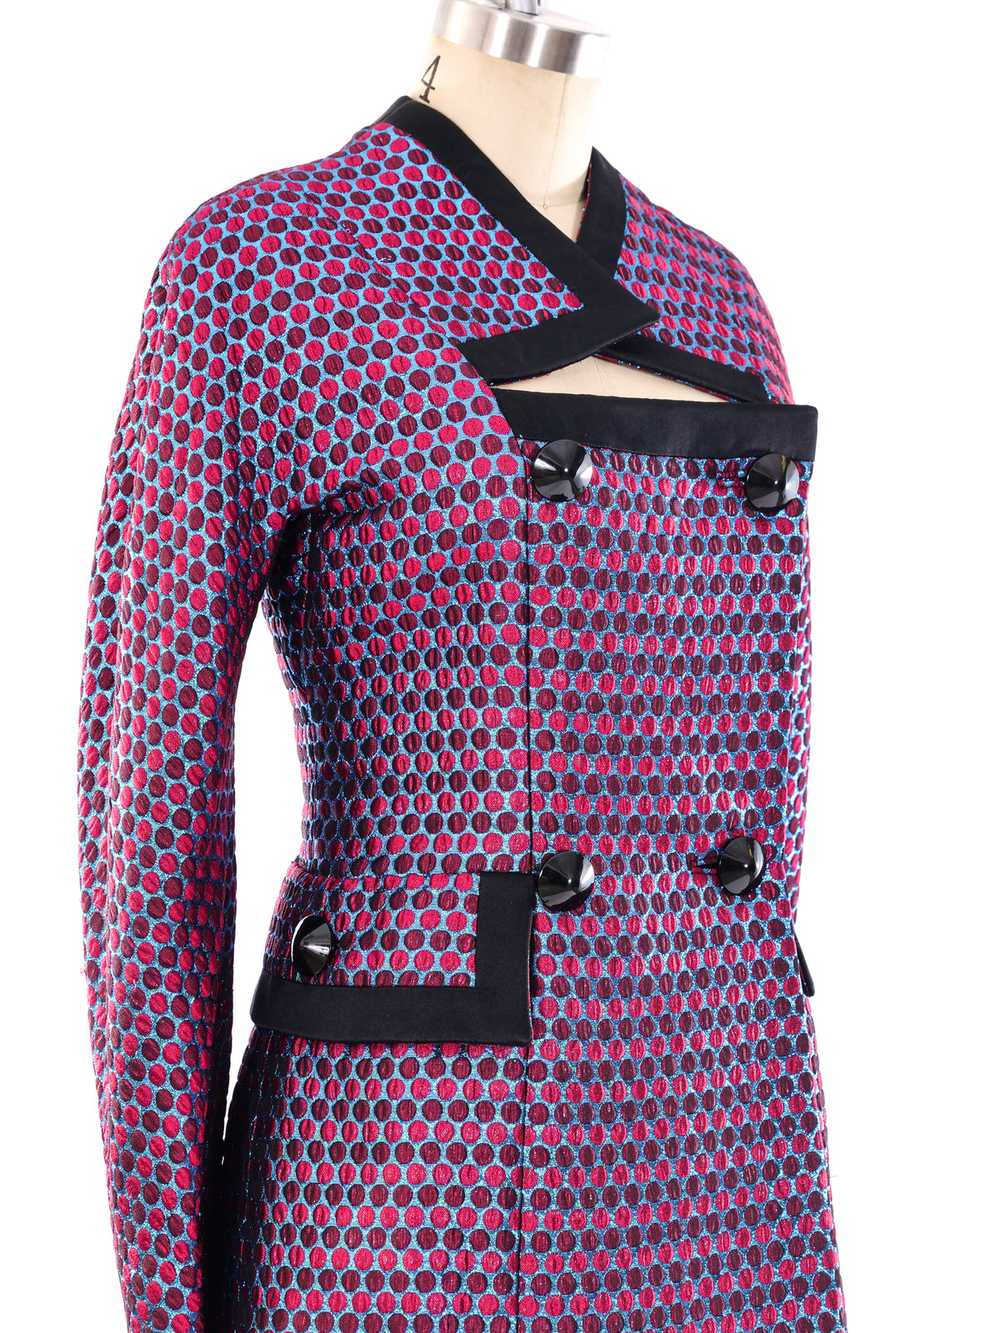 Galanos Tailored Iridescent Brocade Skirt Suit - image 4